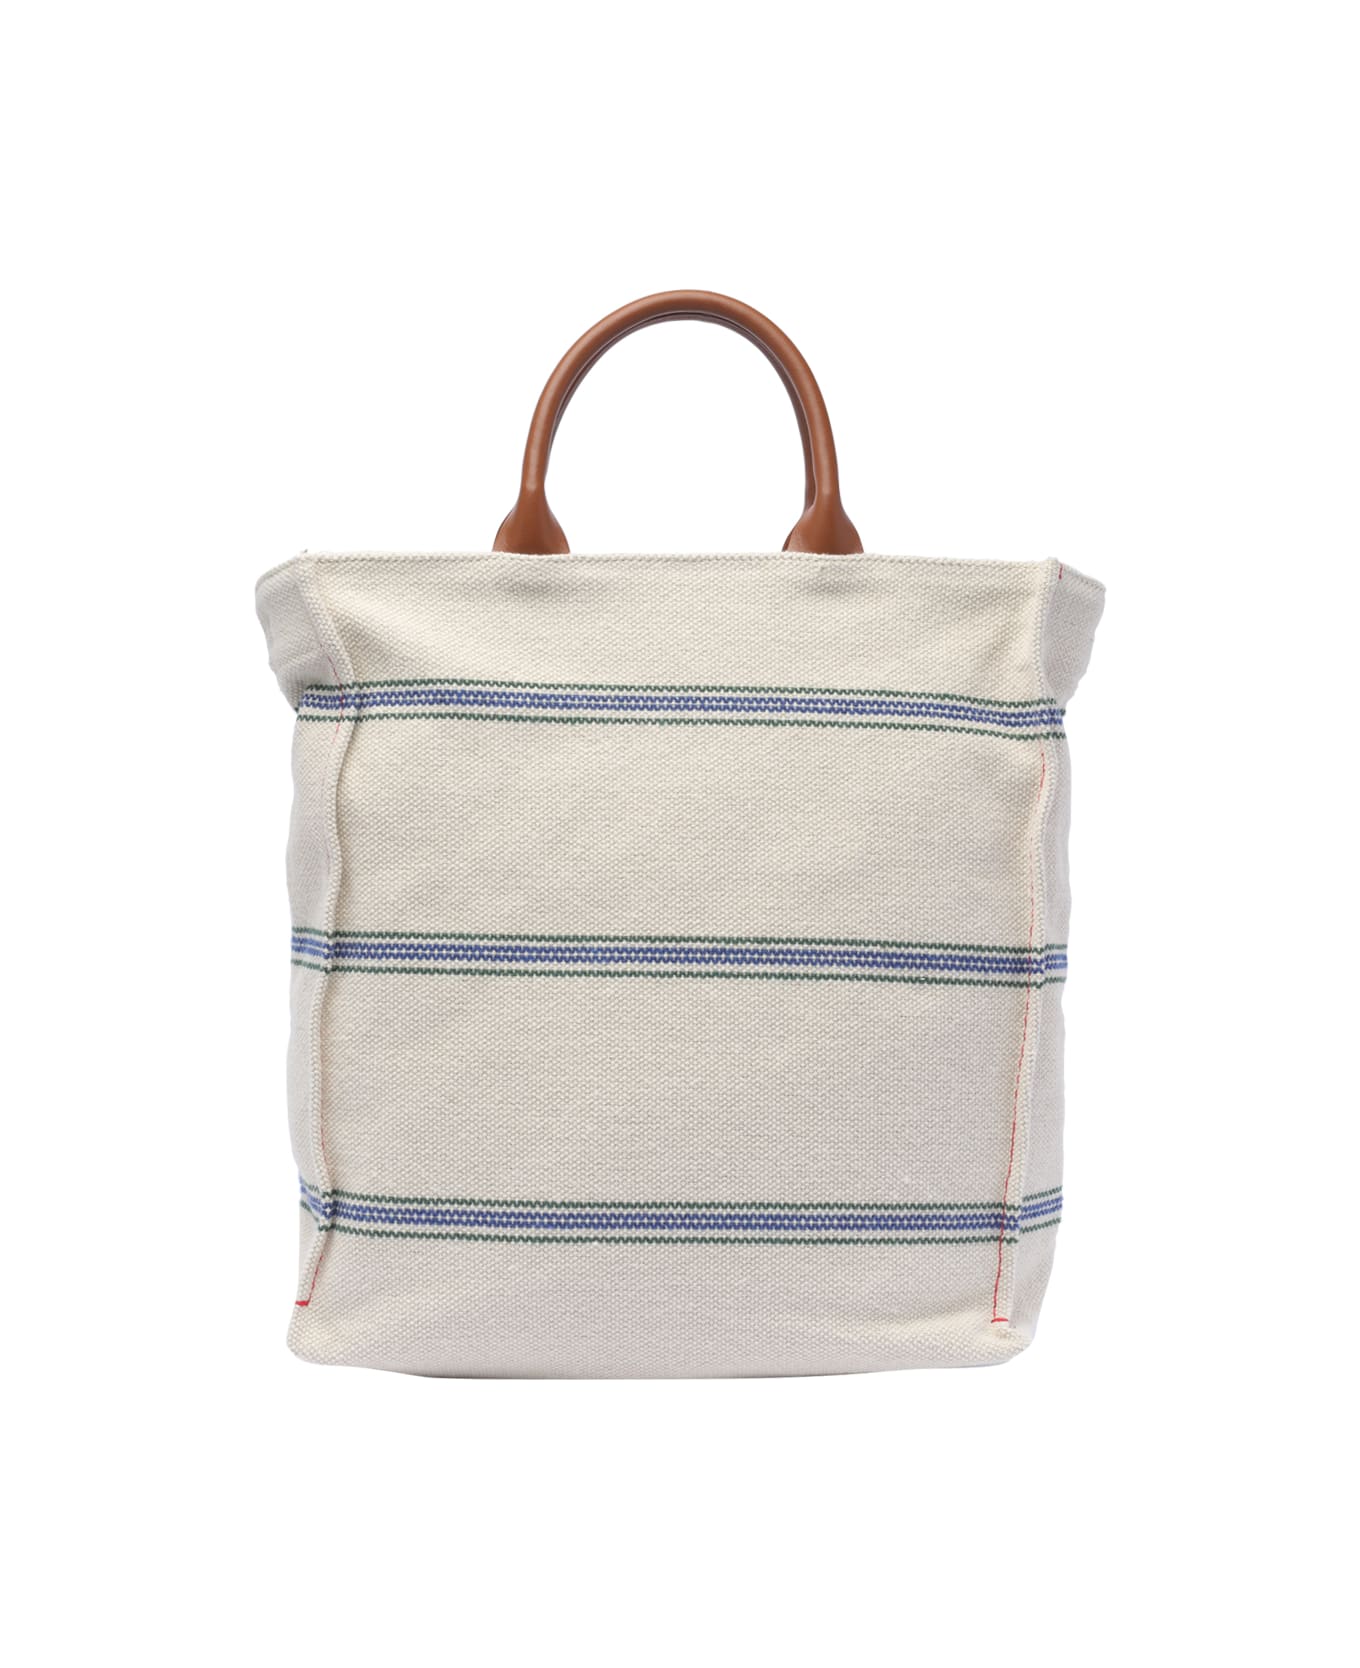 Marni Logo Shopping Bag - Beige/blu トートバッグ